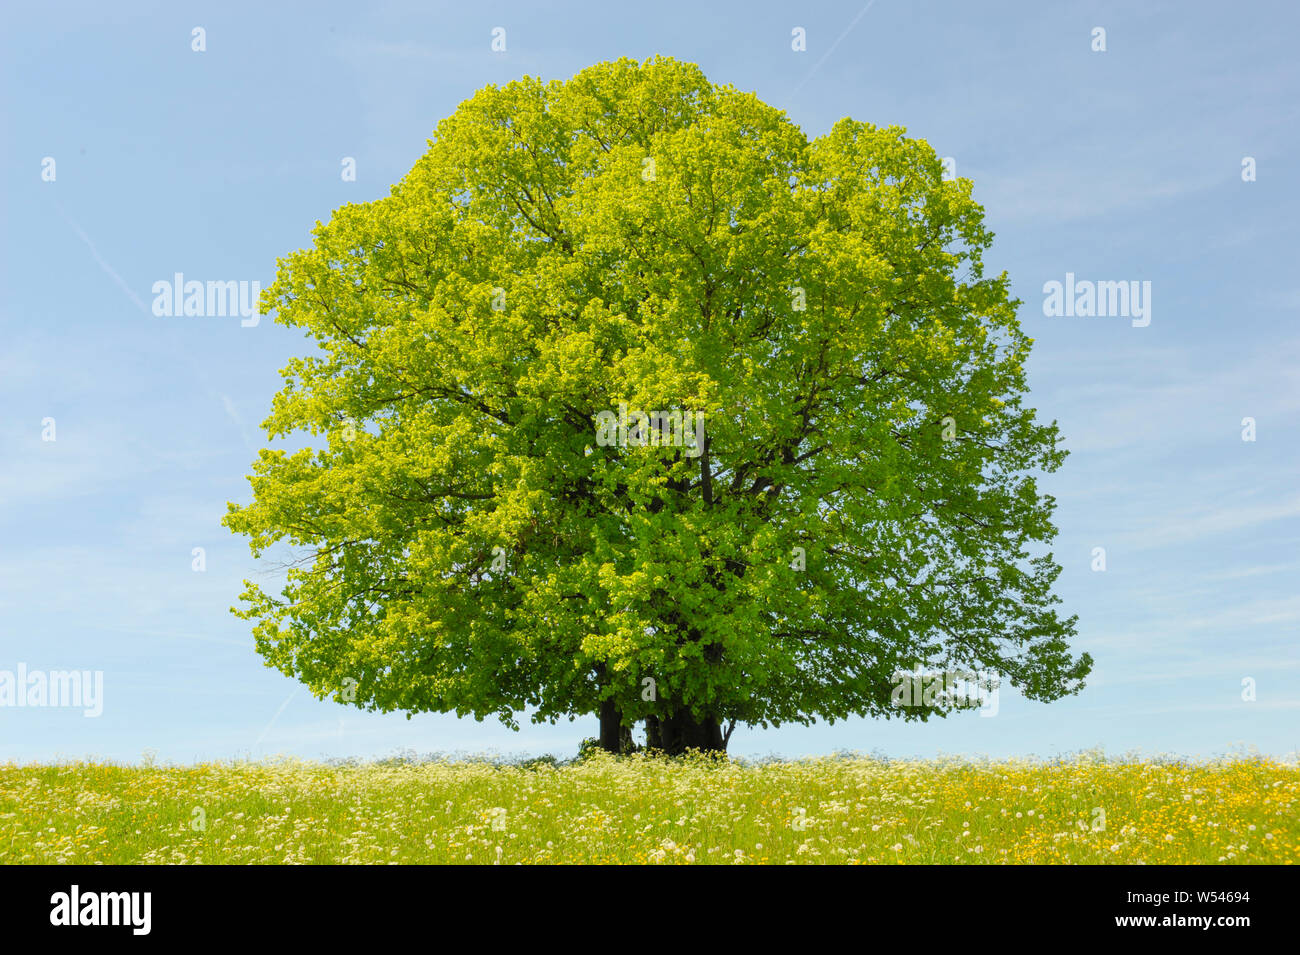 single tree wirh perfect treetop in meadow Stock Photo